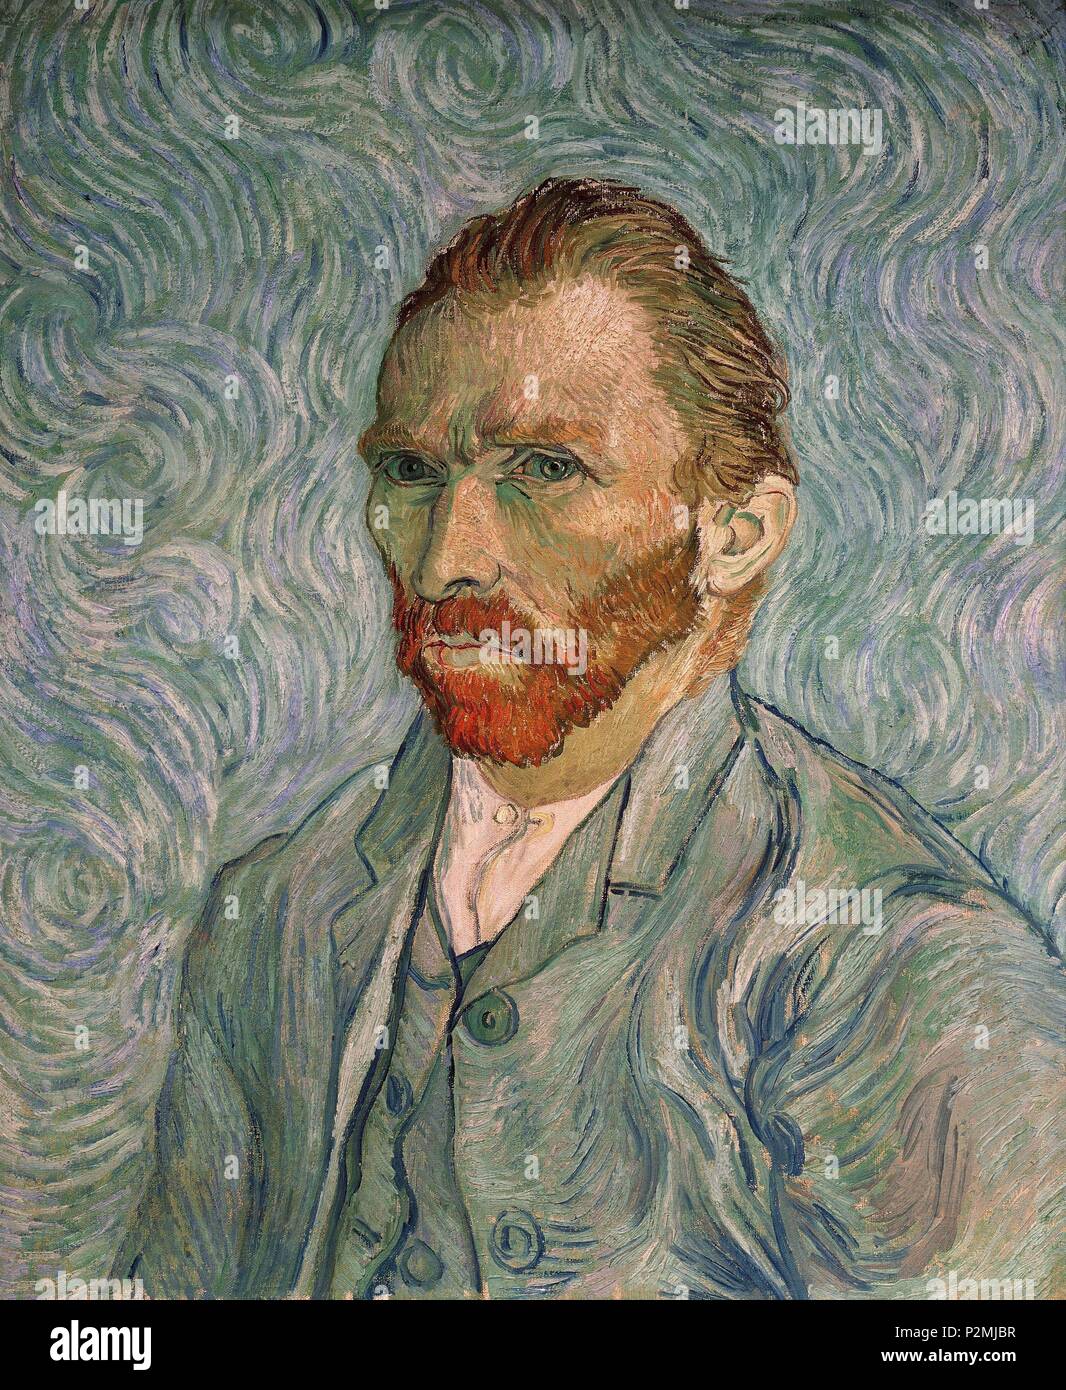 'Selbst-Portrait", 1889, Öl auf Leinwand, 65 x 54 cm. Autor: Vincent van Gogh (1853-1890). Lage: Musee D'Orsay, Frankreich. Stockfoto